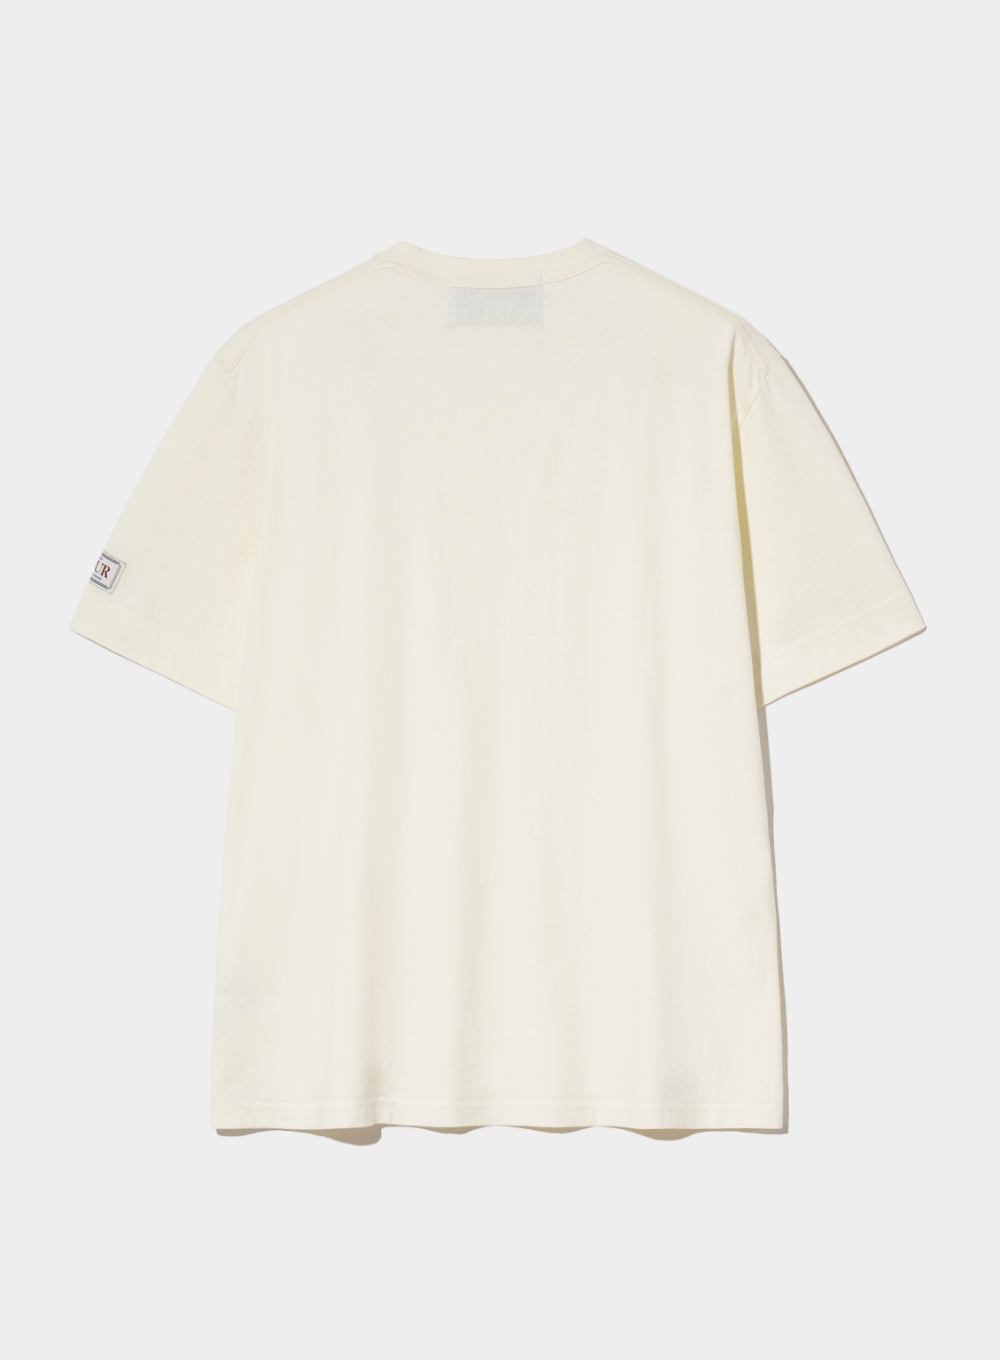 Bon Voyage Raw-Cut Applique T-Shirt - Cream Ivory